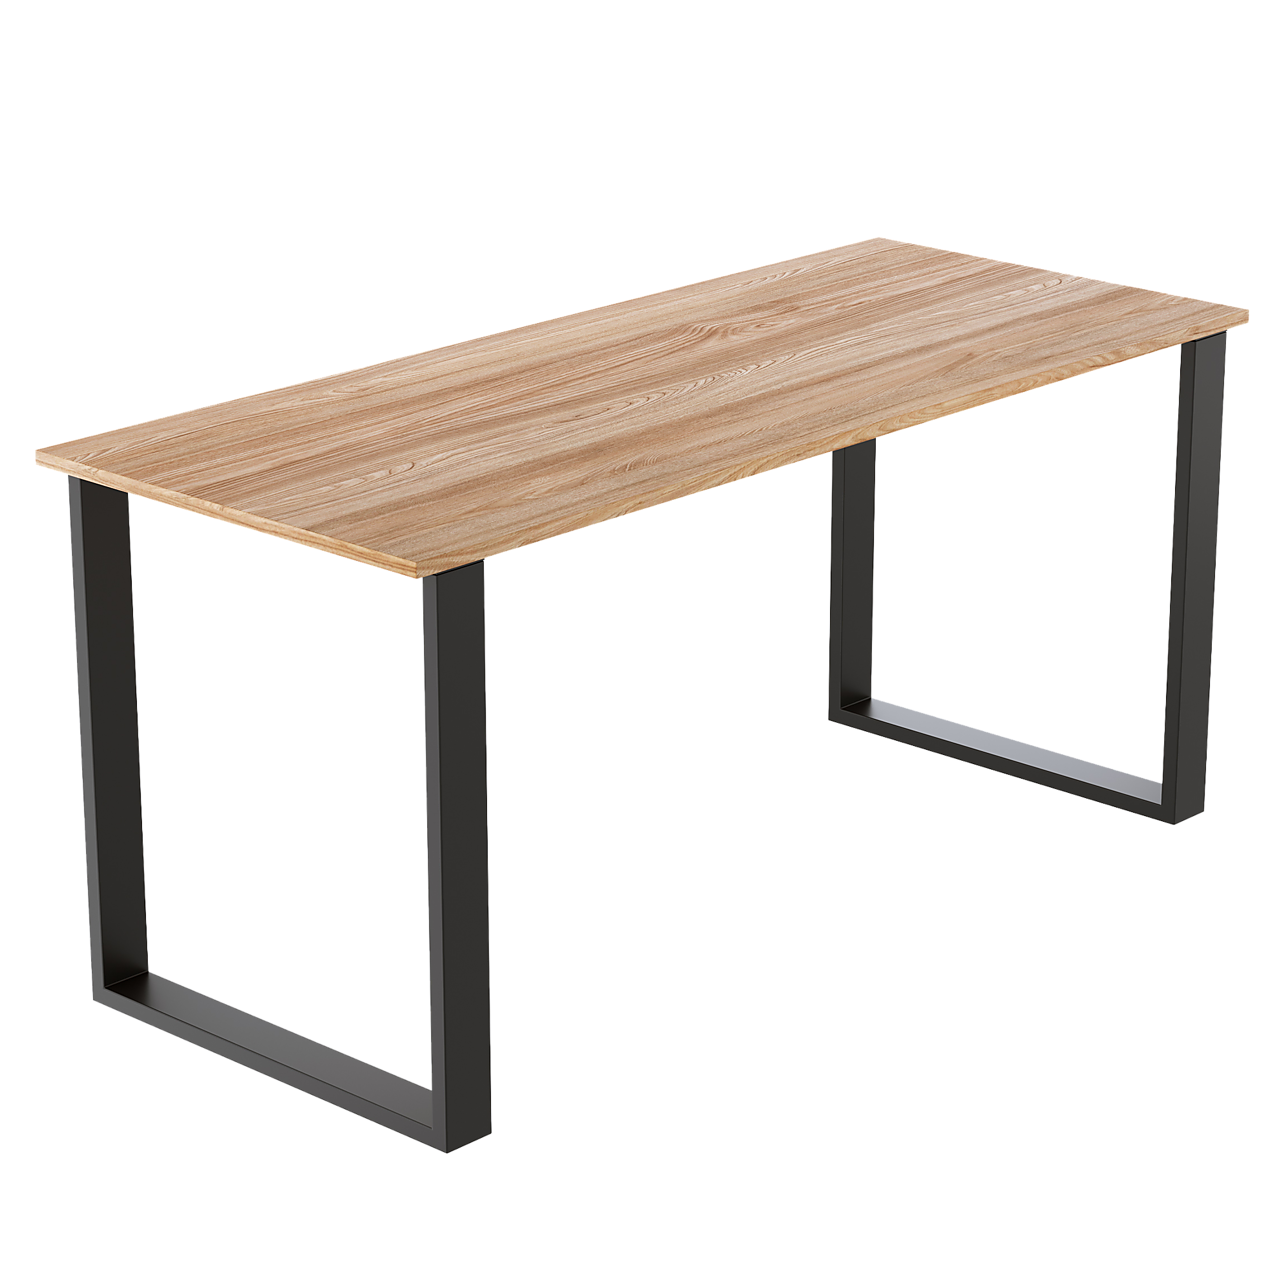 Rectangular-Shaped Table Bench Desk Legs Retro Industrial Design Fully ...